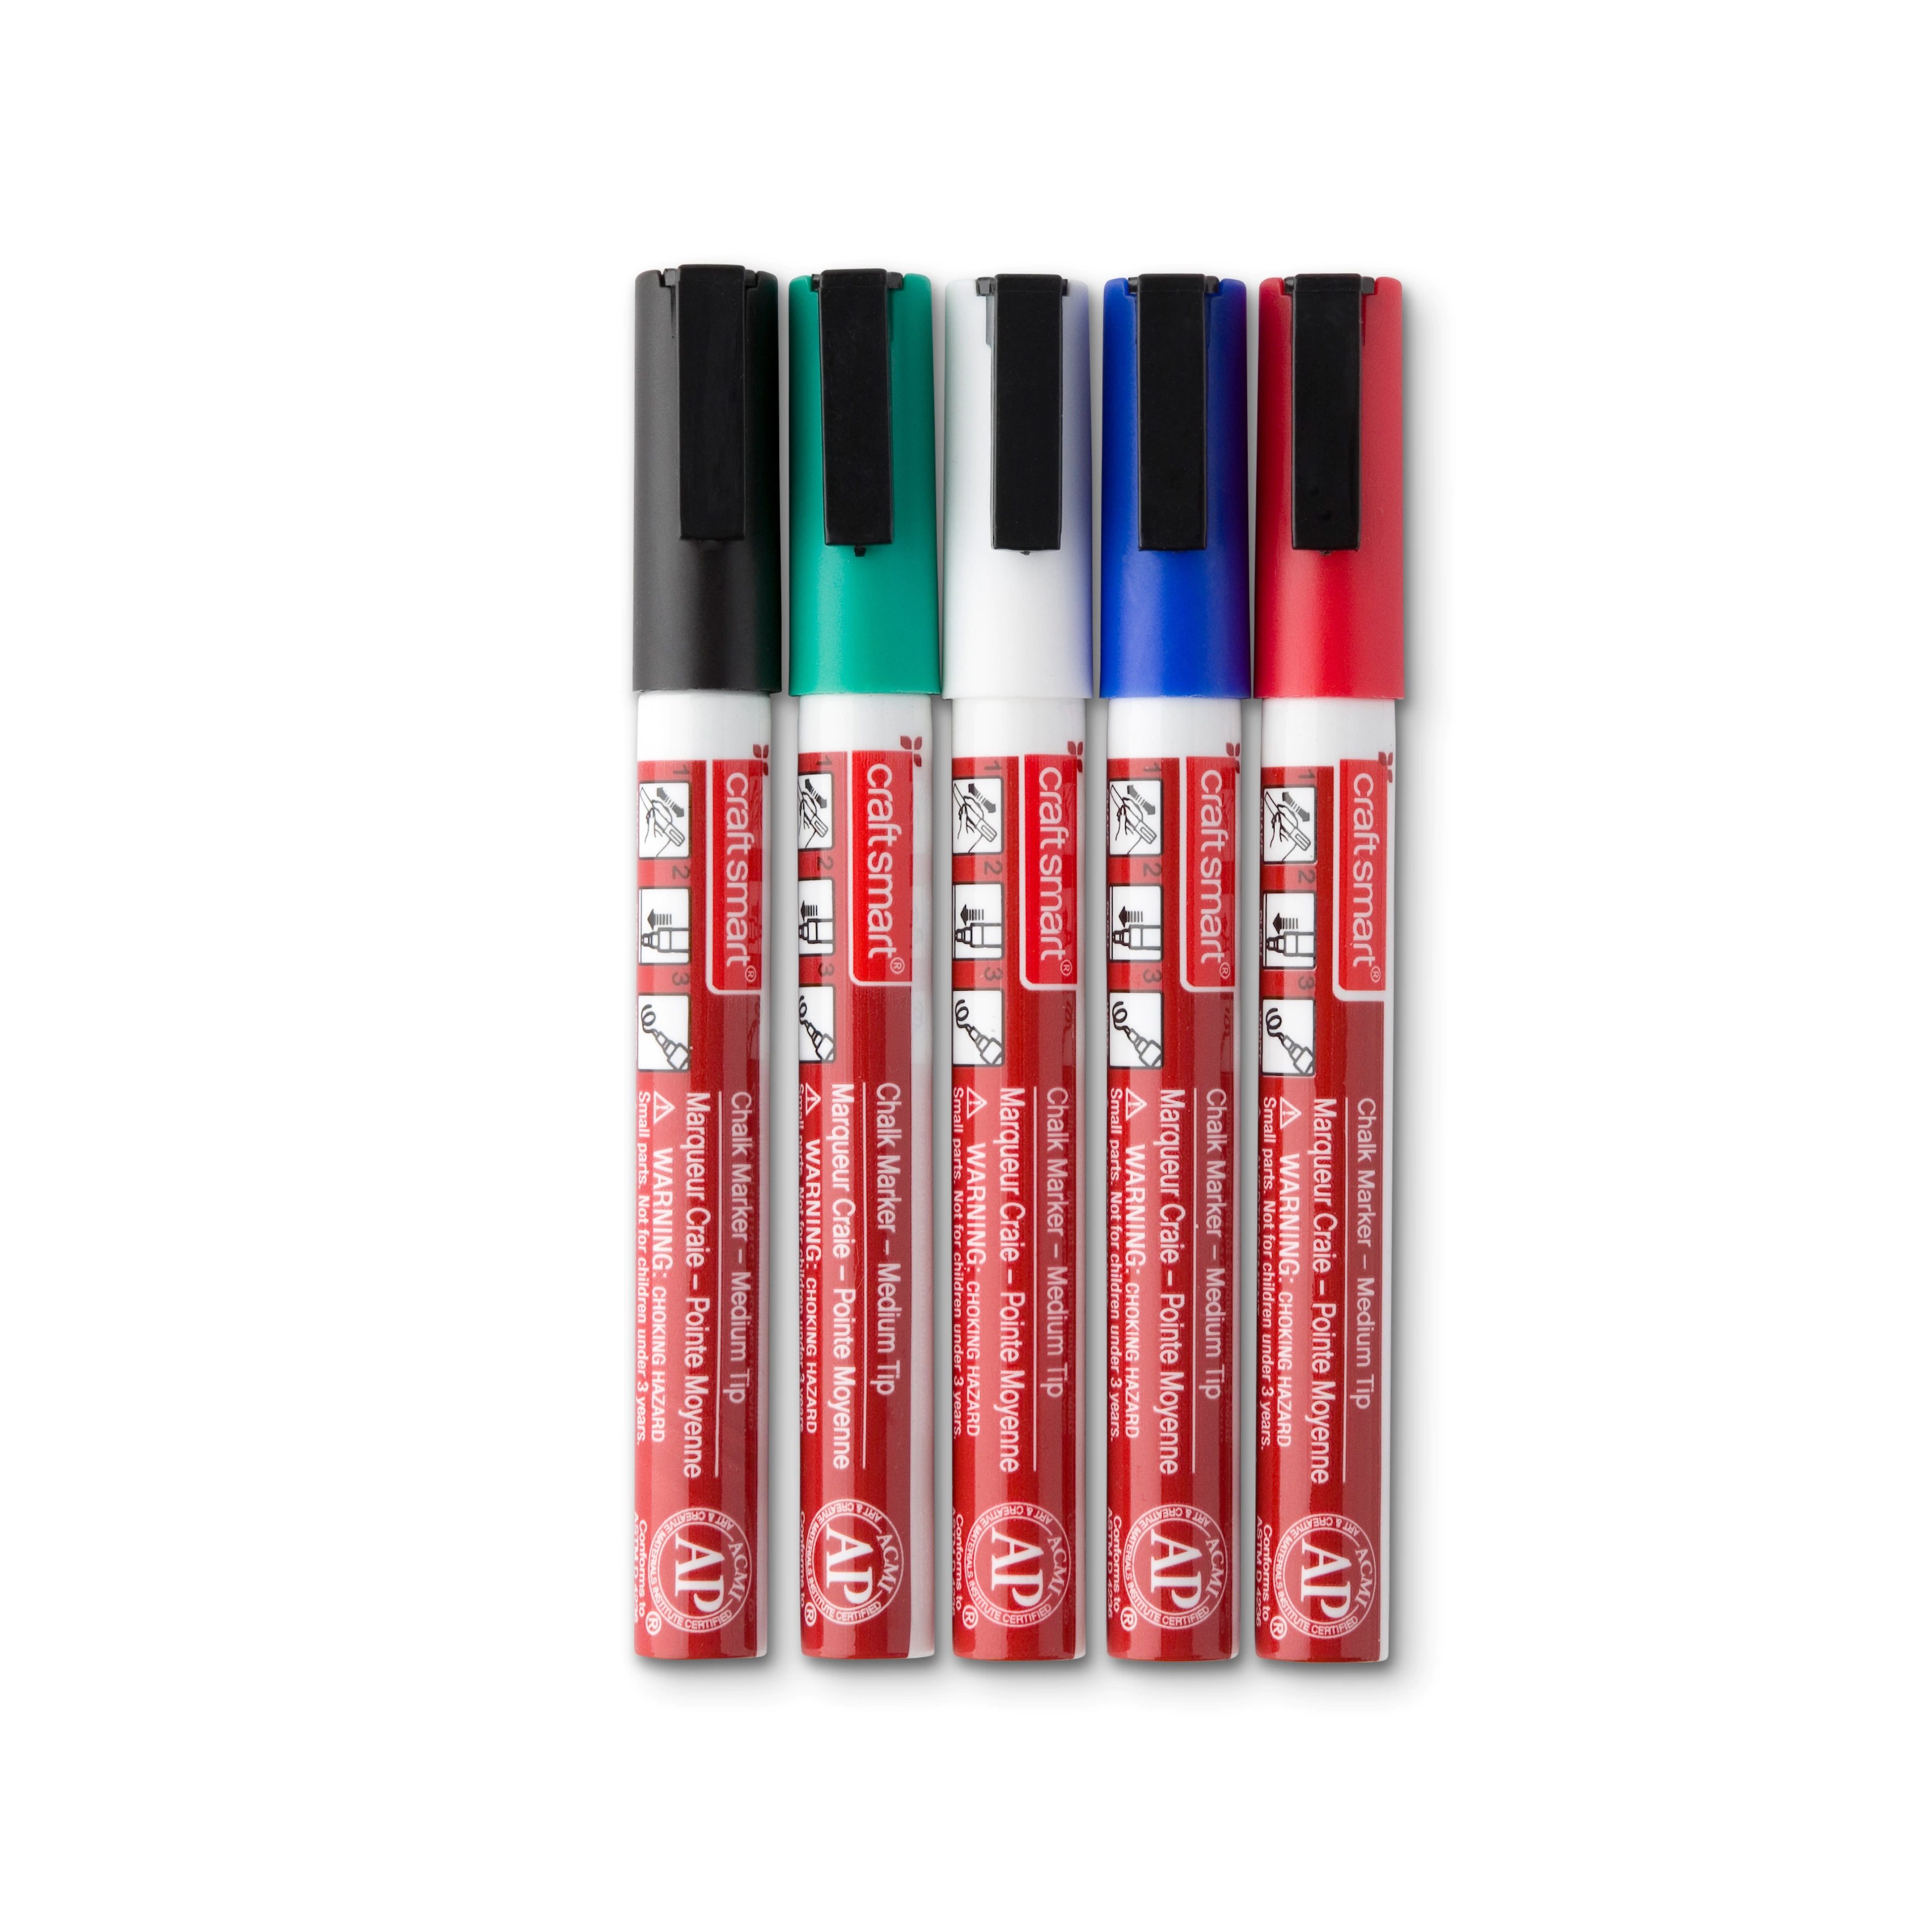 8 Packs: 12 ct. (96 total) Medium Line Paint Pen Set by Craft